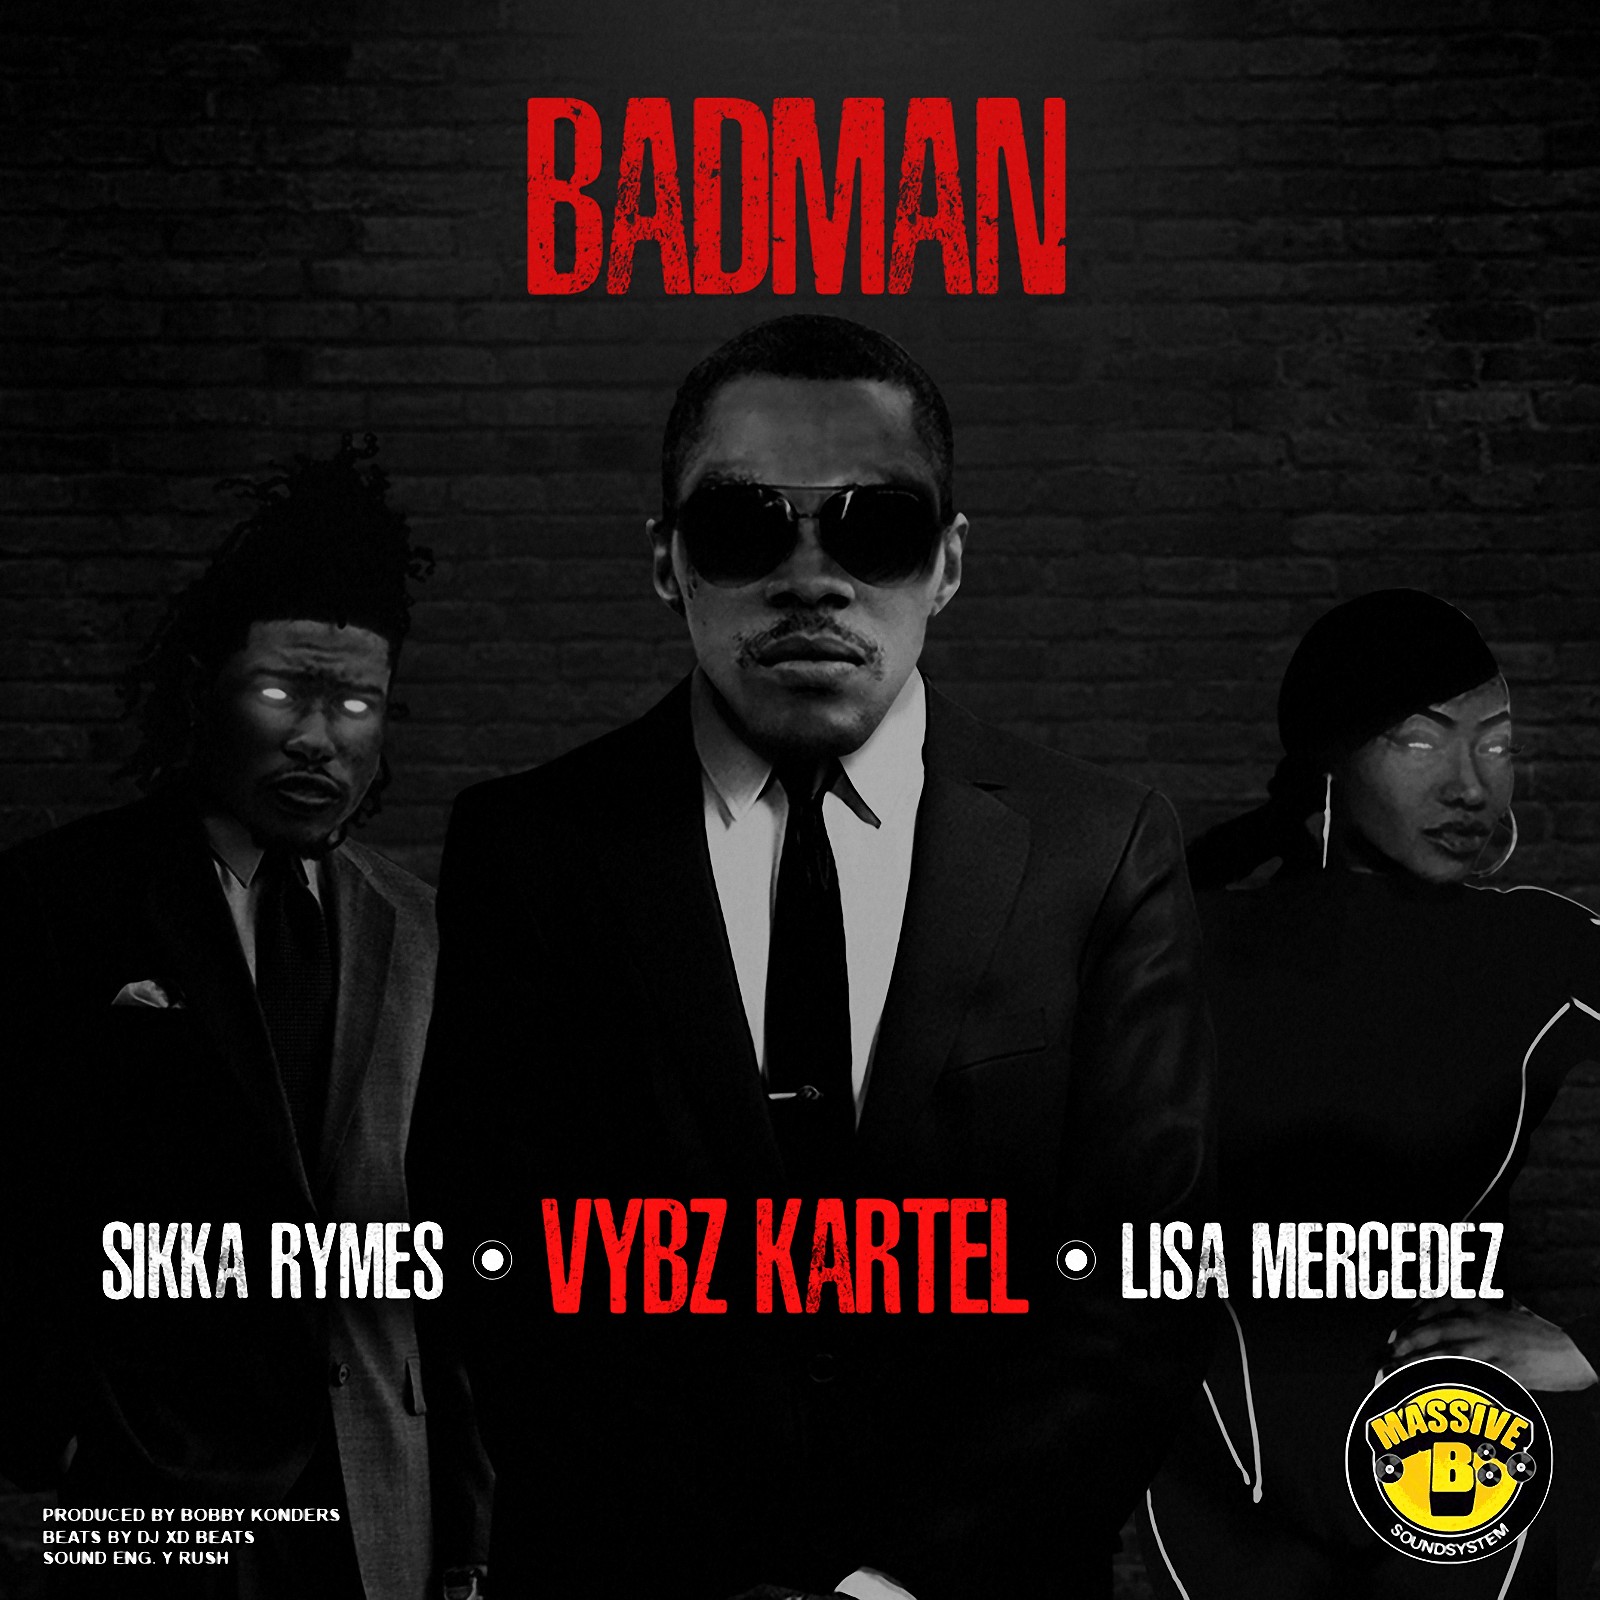 Vybz Kartel - BADMAN - Feat. Lisa Mercedez & Sikka Rymes  - Massive B